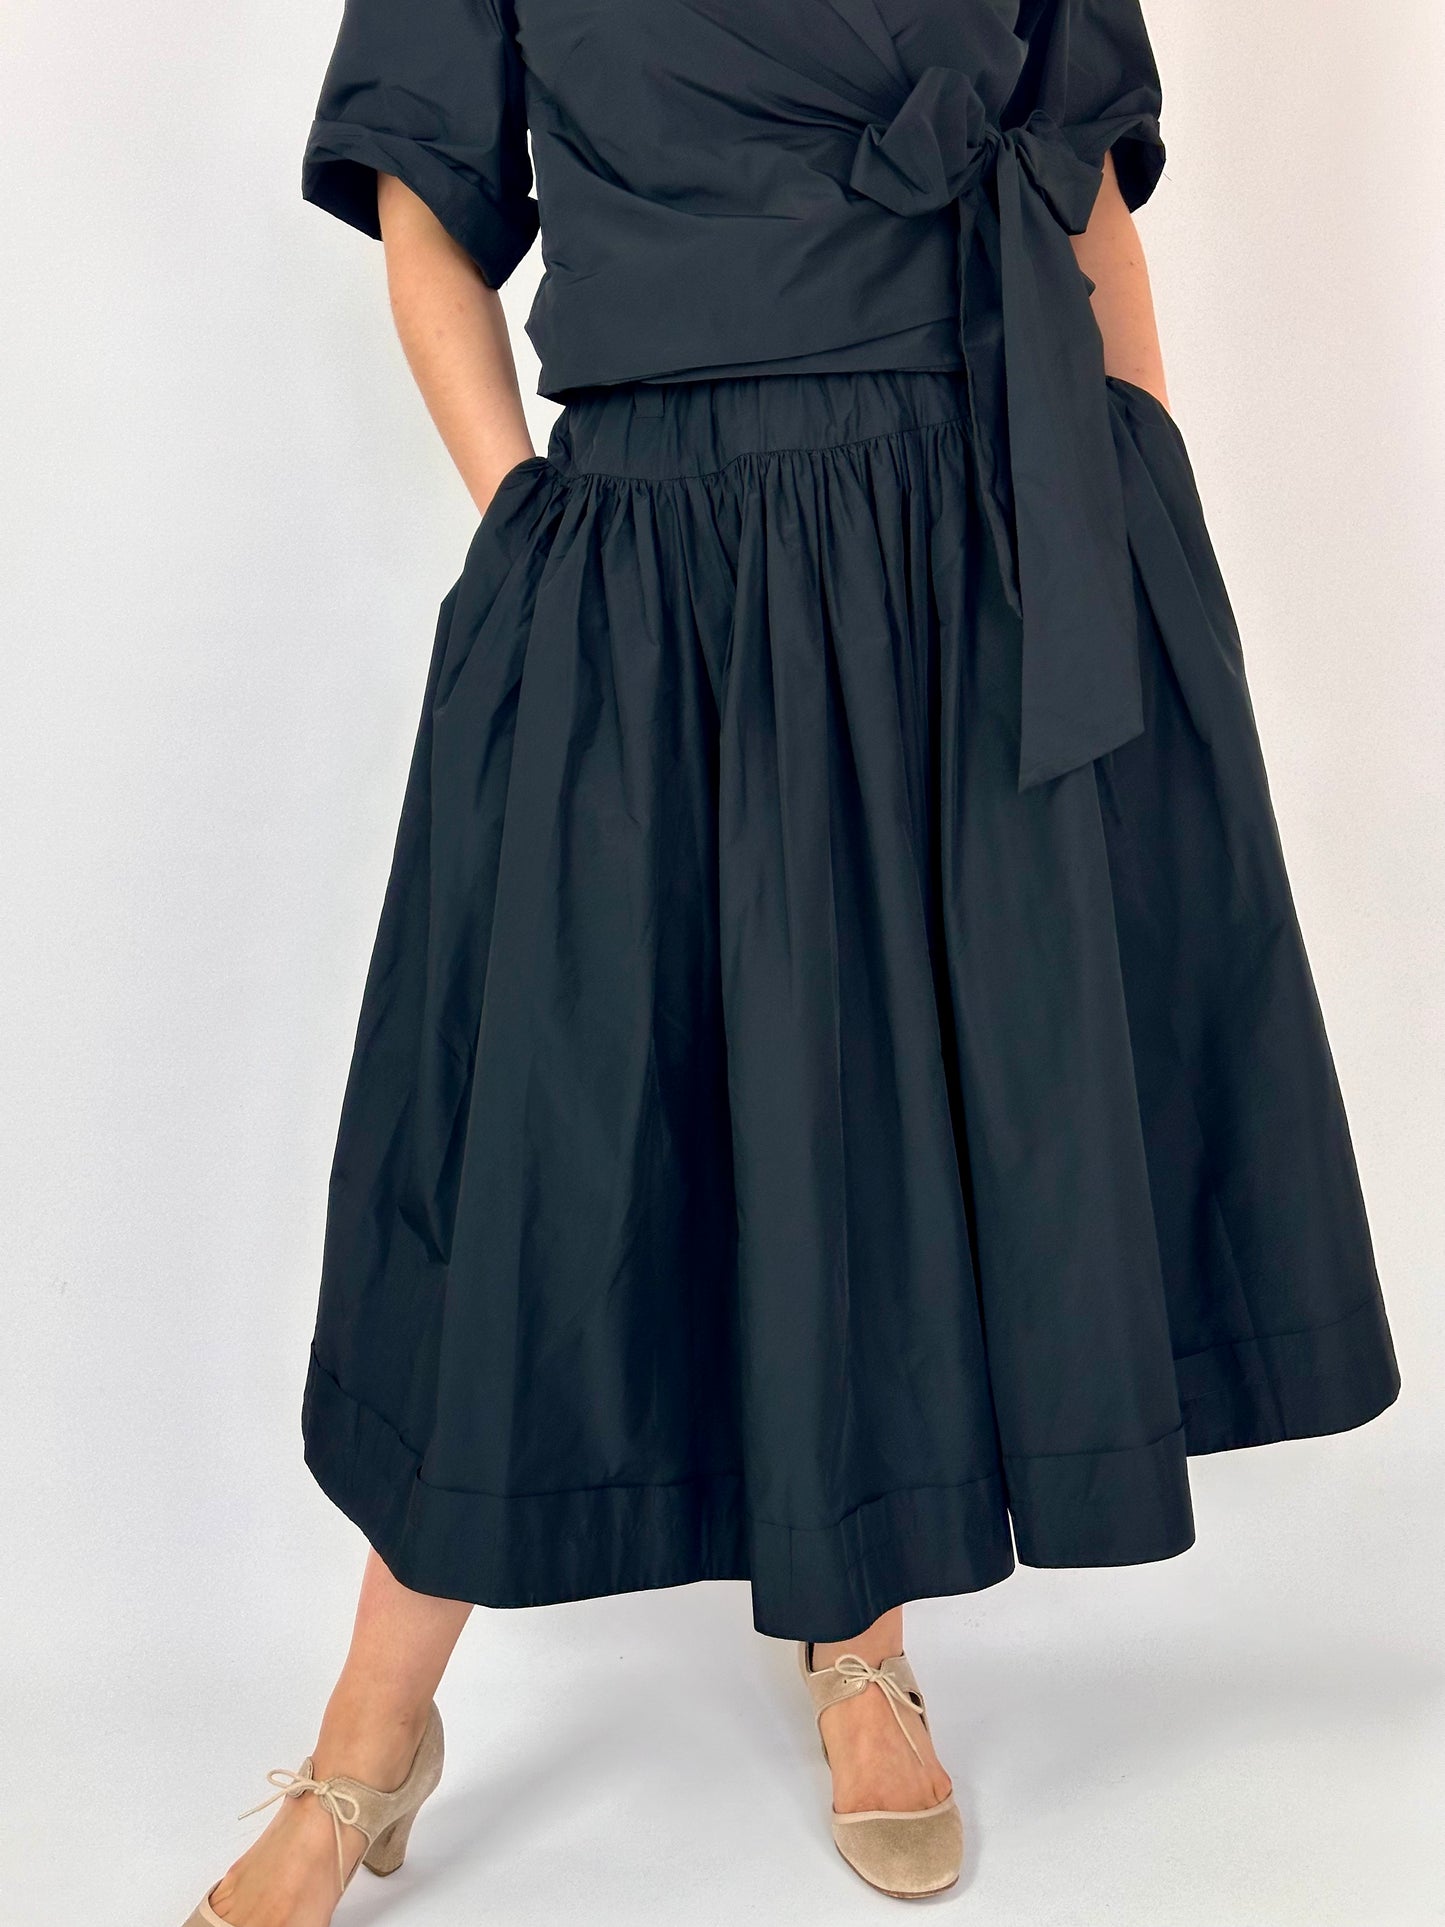 LFDA 613 Skirt Black